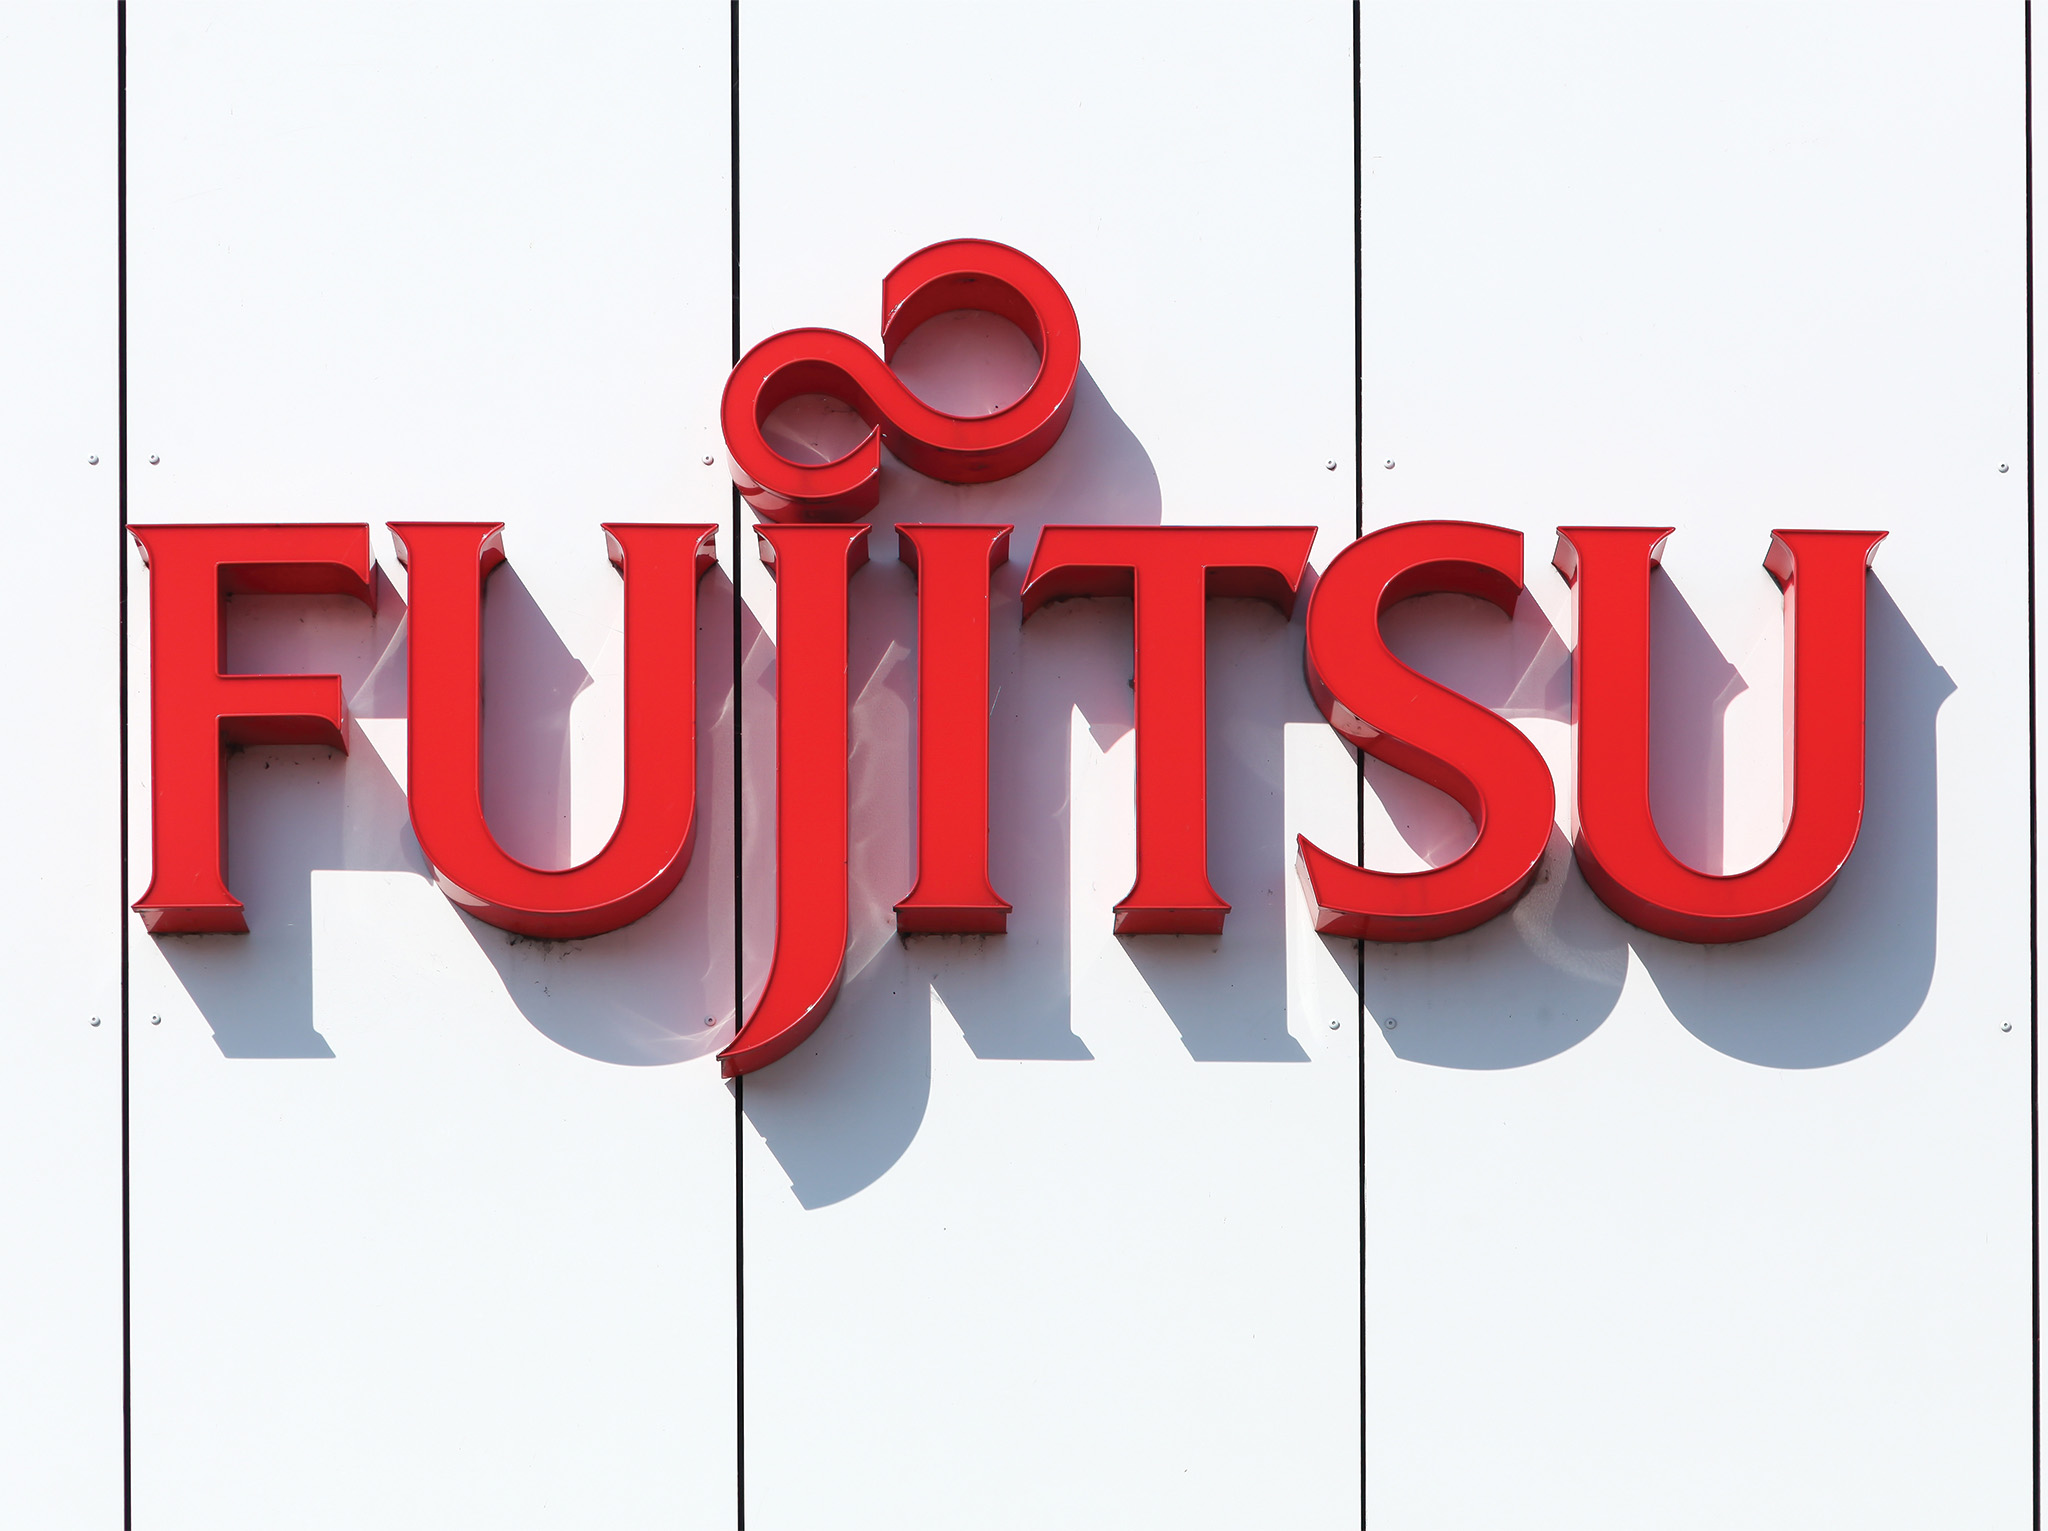 Fujitsu Post office blunder, news round up